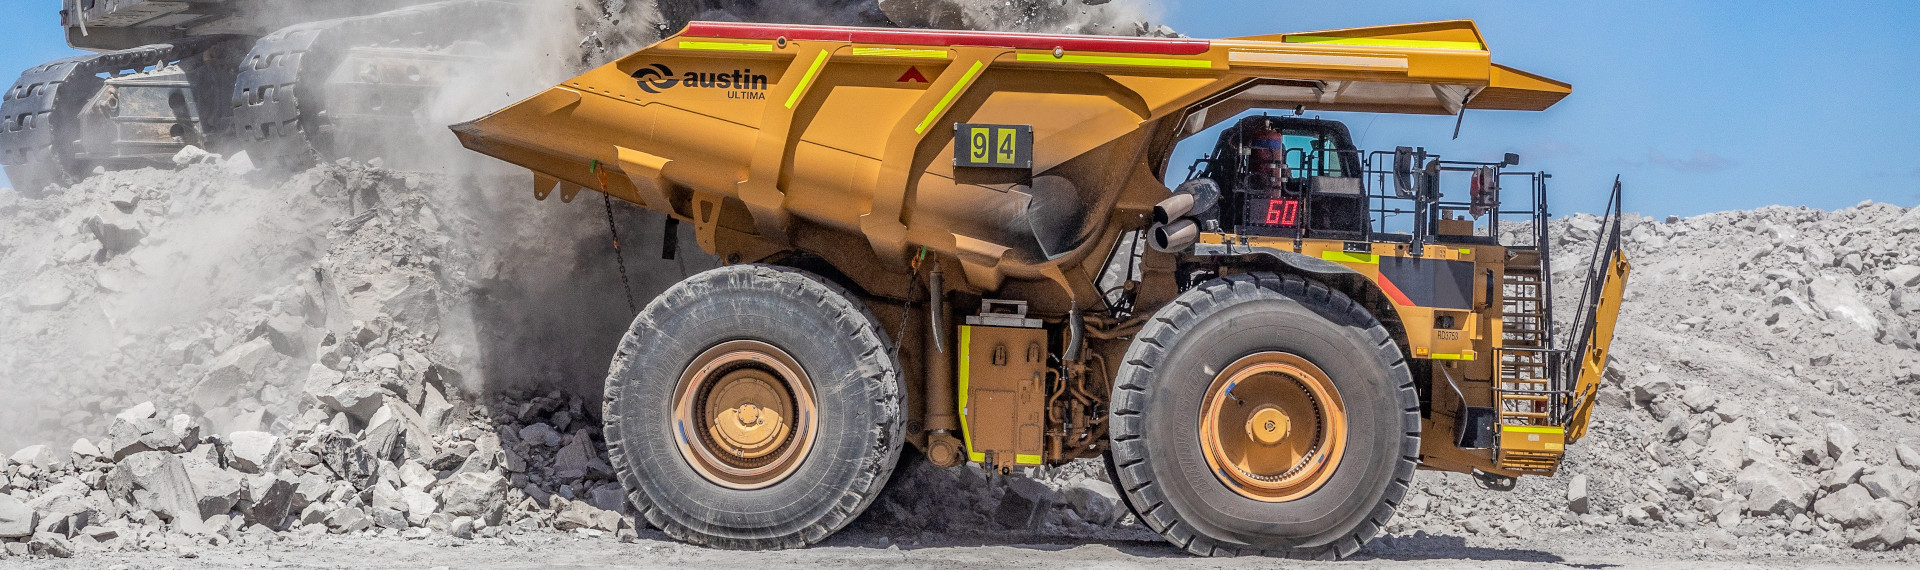 Large mining truck innovation –Austin Engineering case